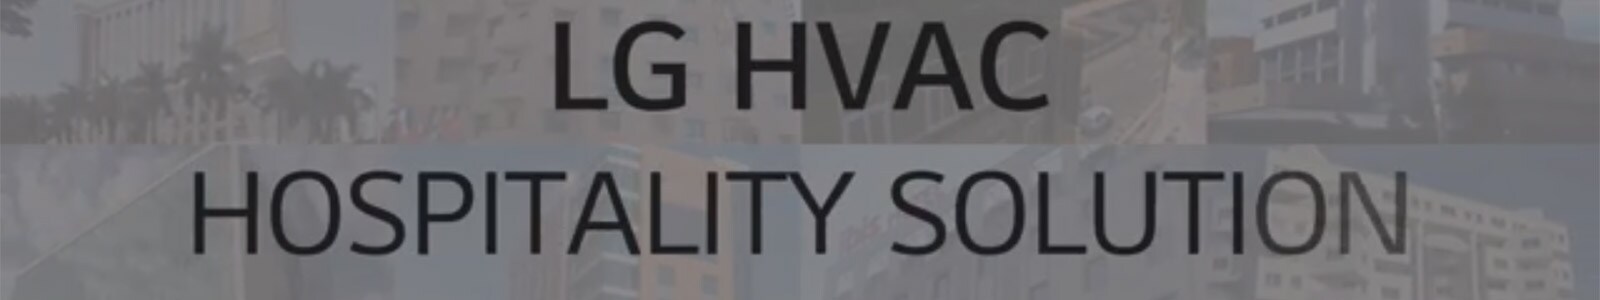 LG HVAC Hospitality Solution1